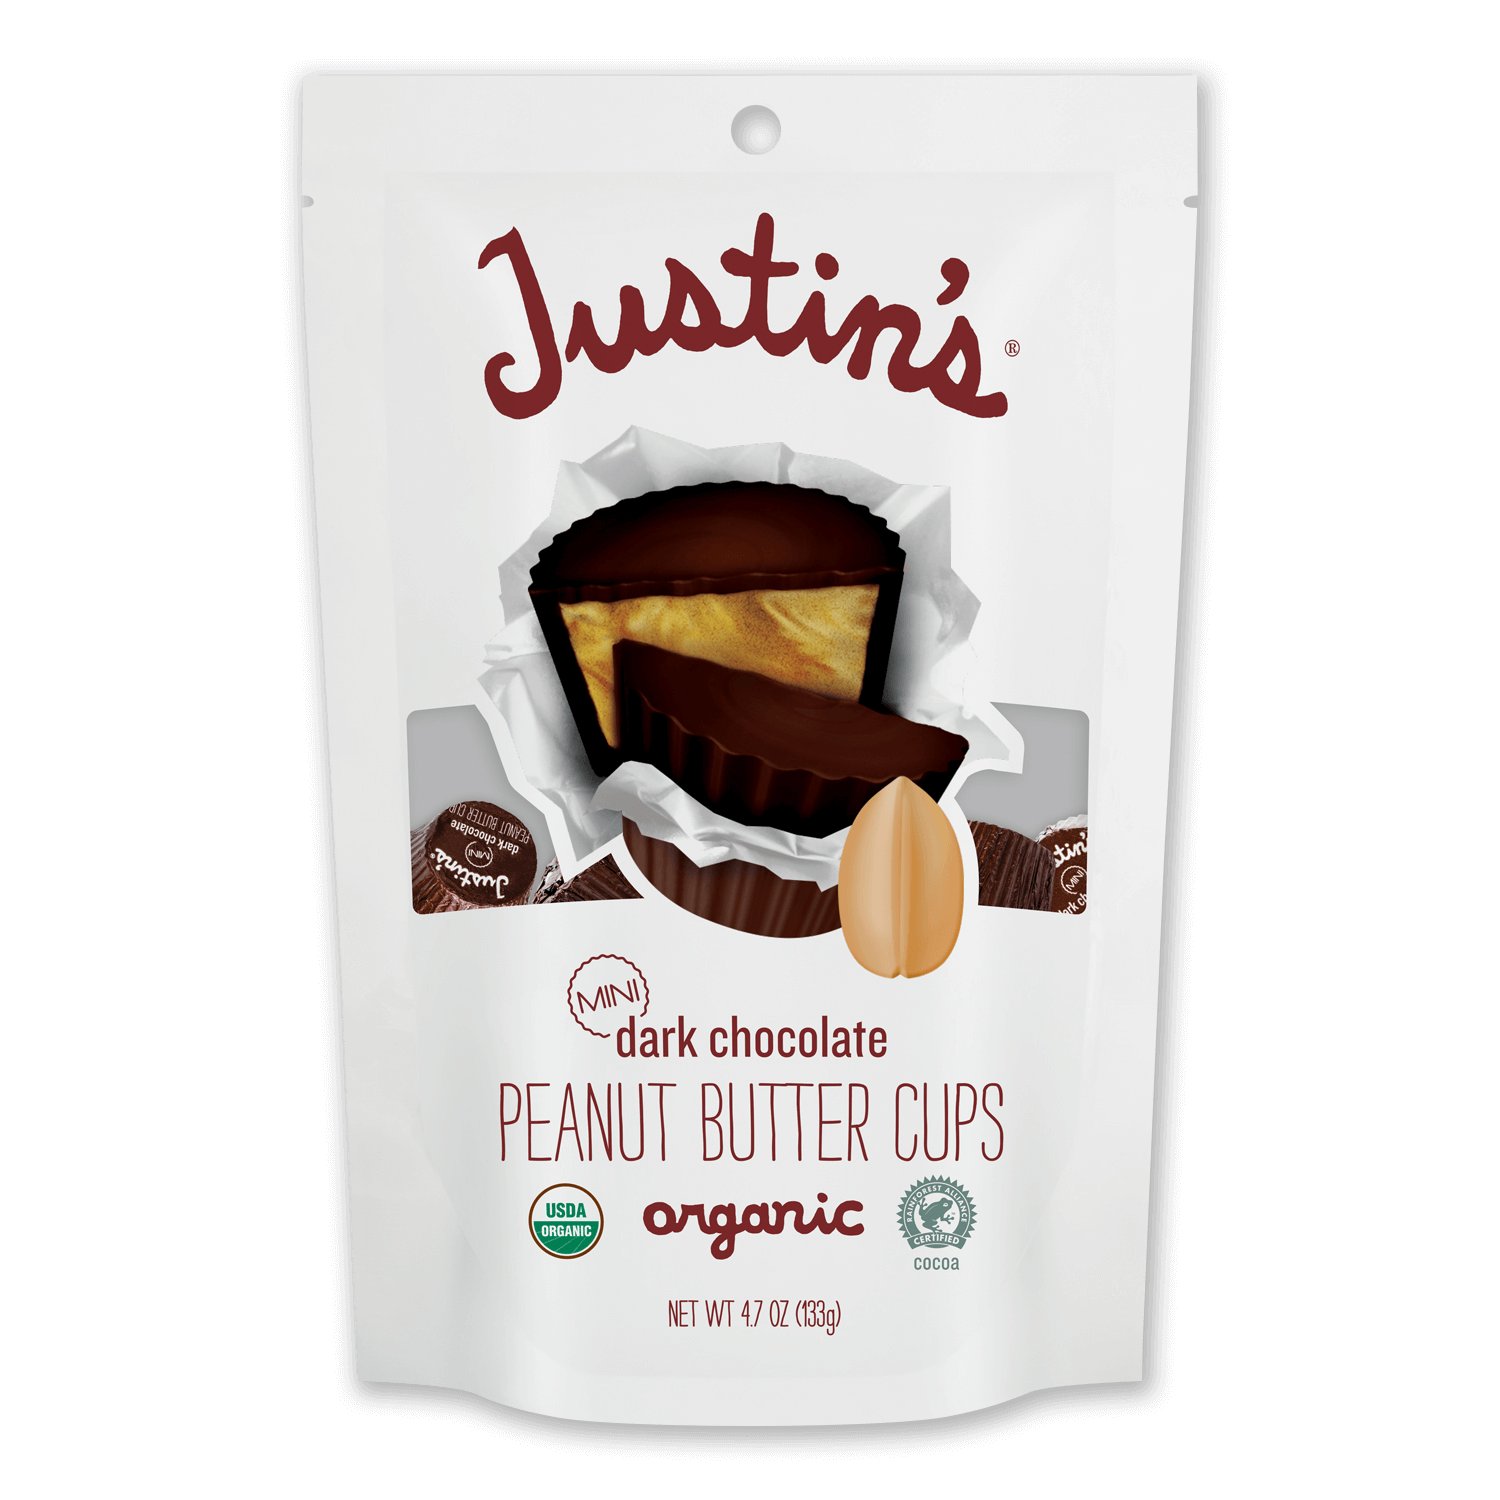 Justin's Mini Dark Chocolate Peanut Butter Cups pack 4.7 oz.